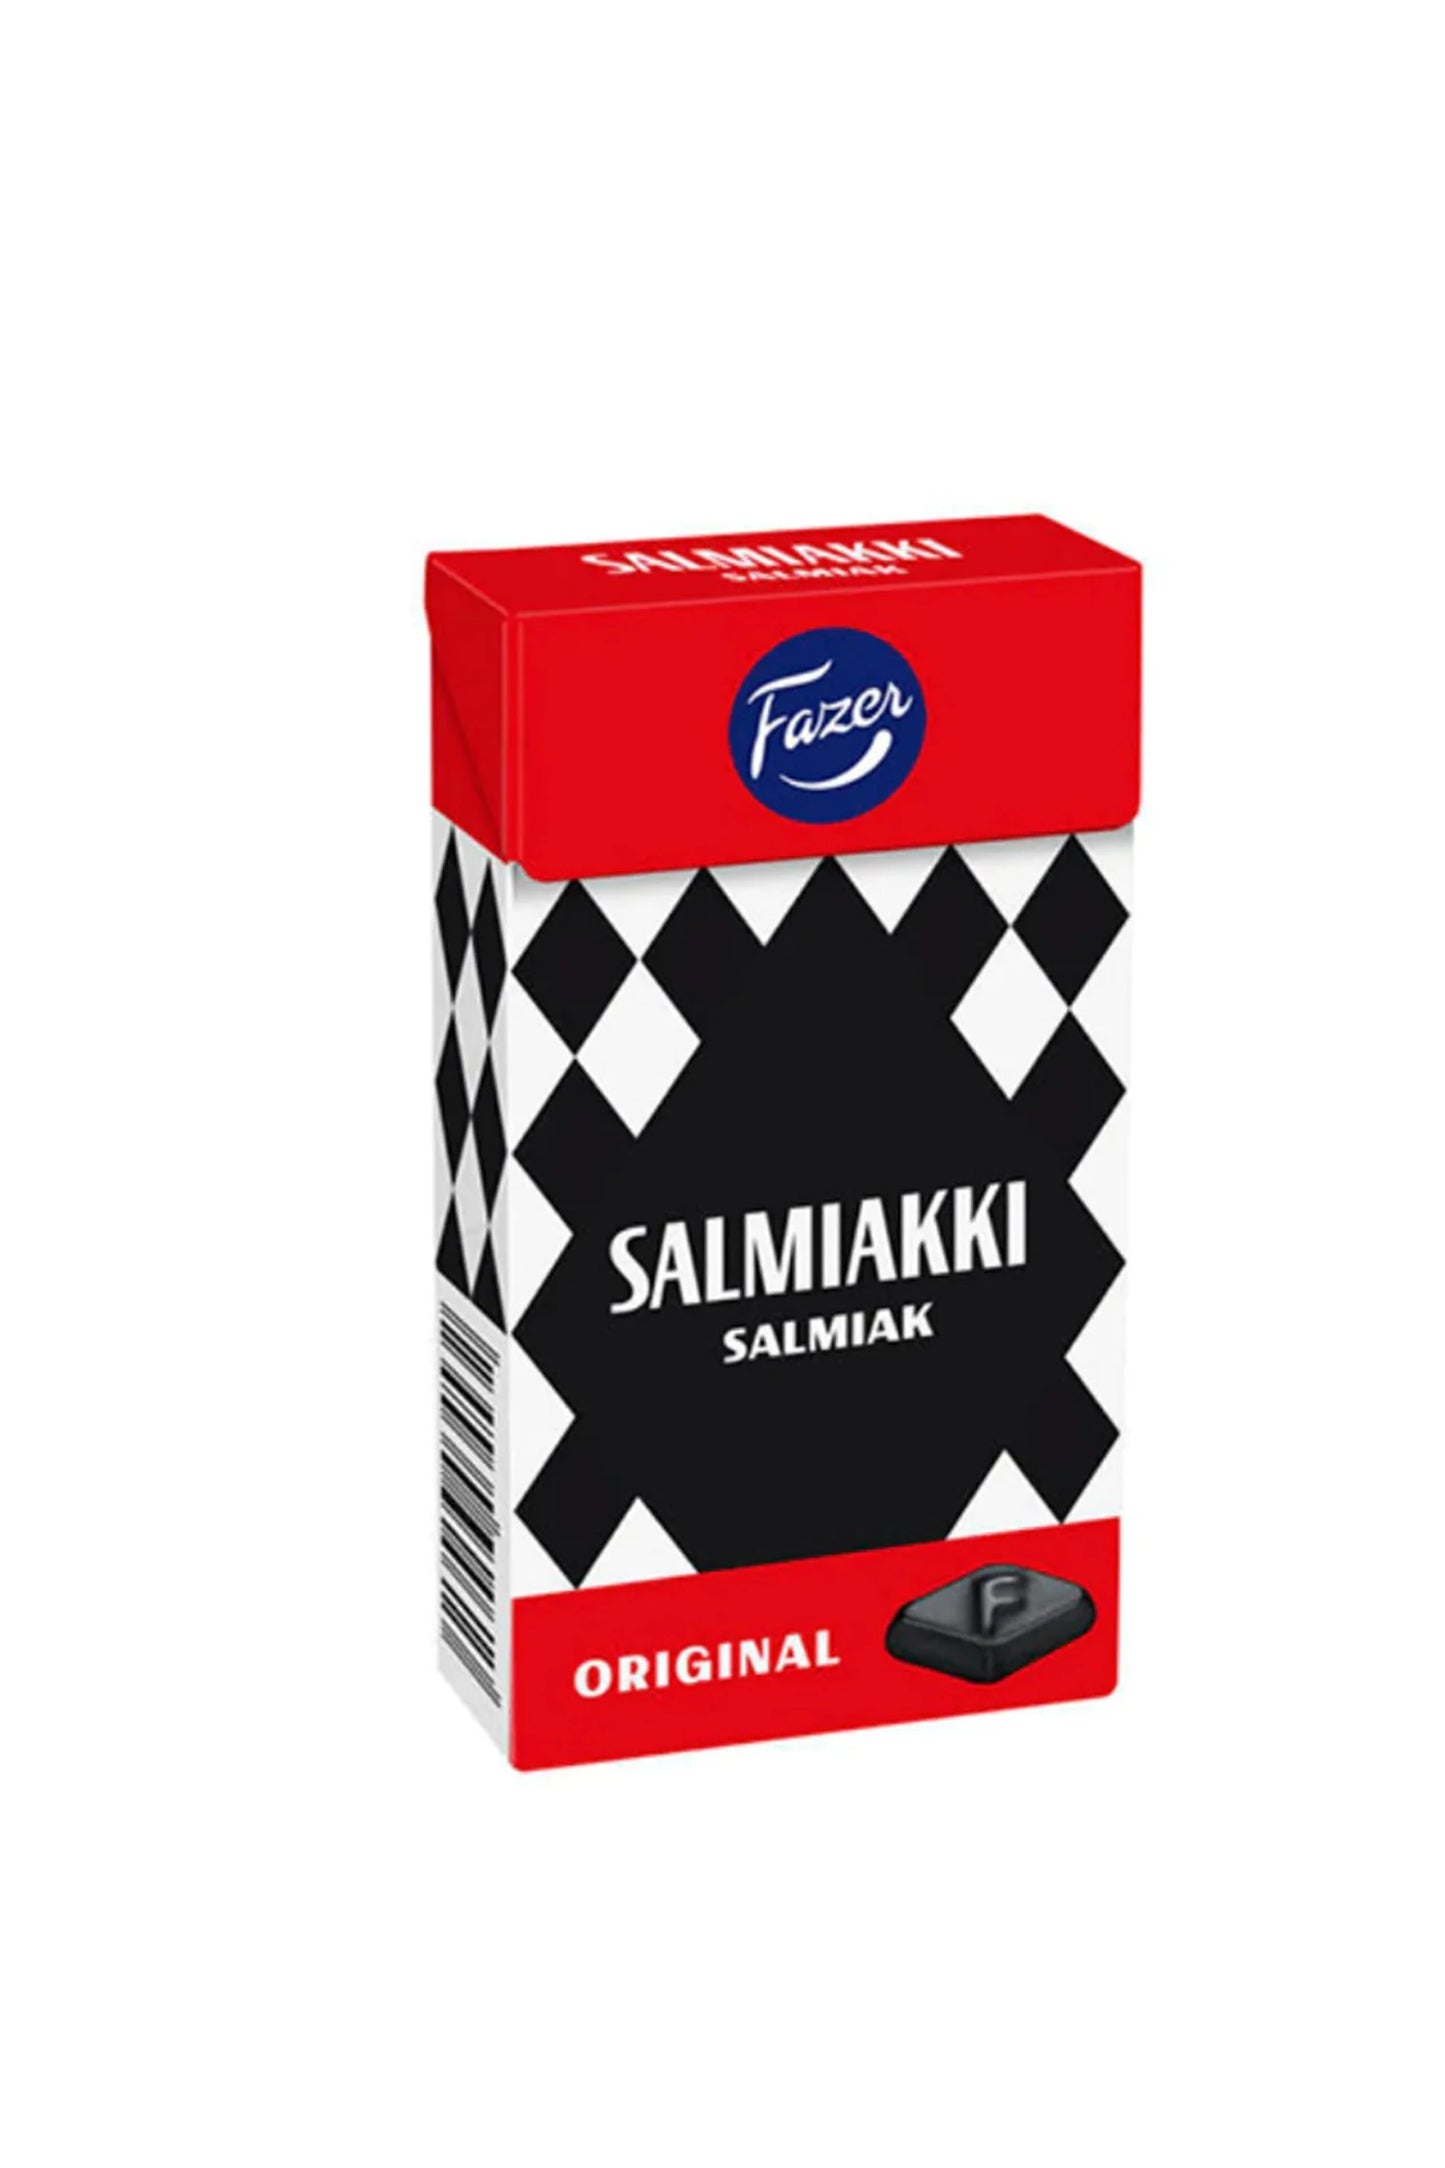 Fazer Salmiakki Salmiak Original - Black Licorice Pastilles 40 Grams (1.4 oz)